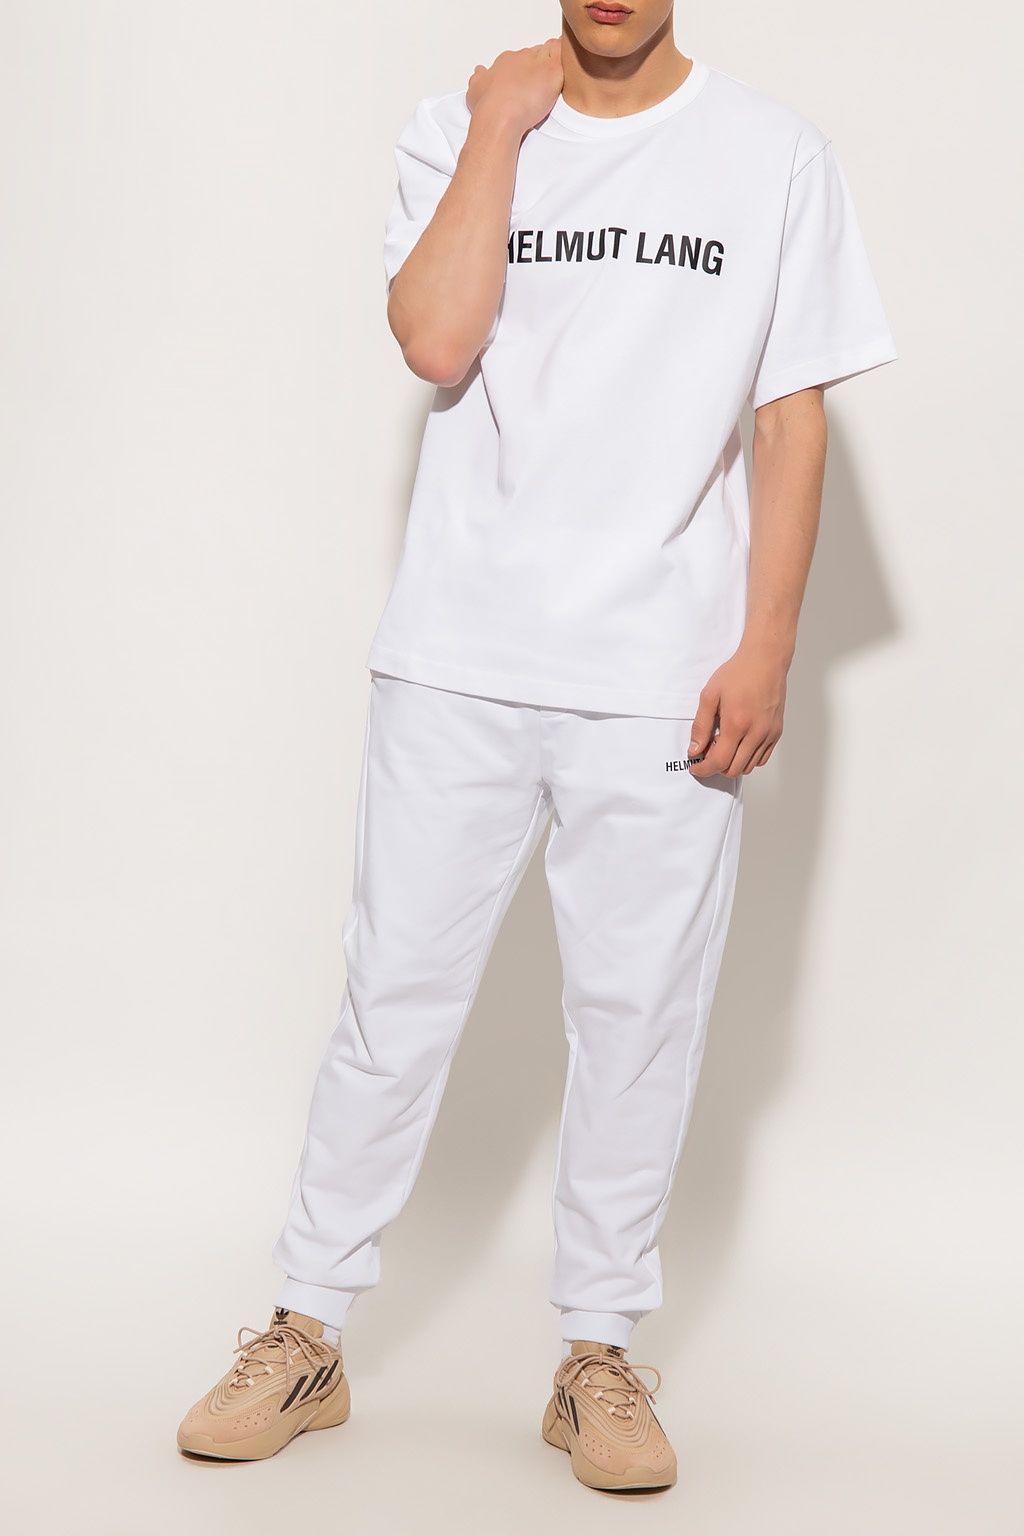 White T-shirt with logo Helmut Lang - Vitkac Canada